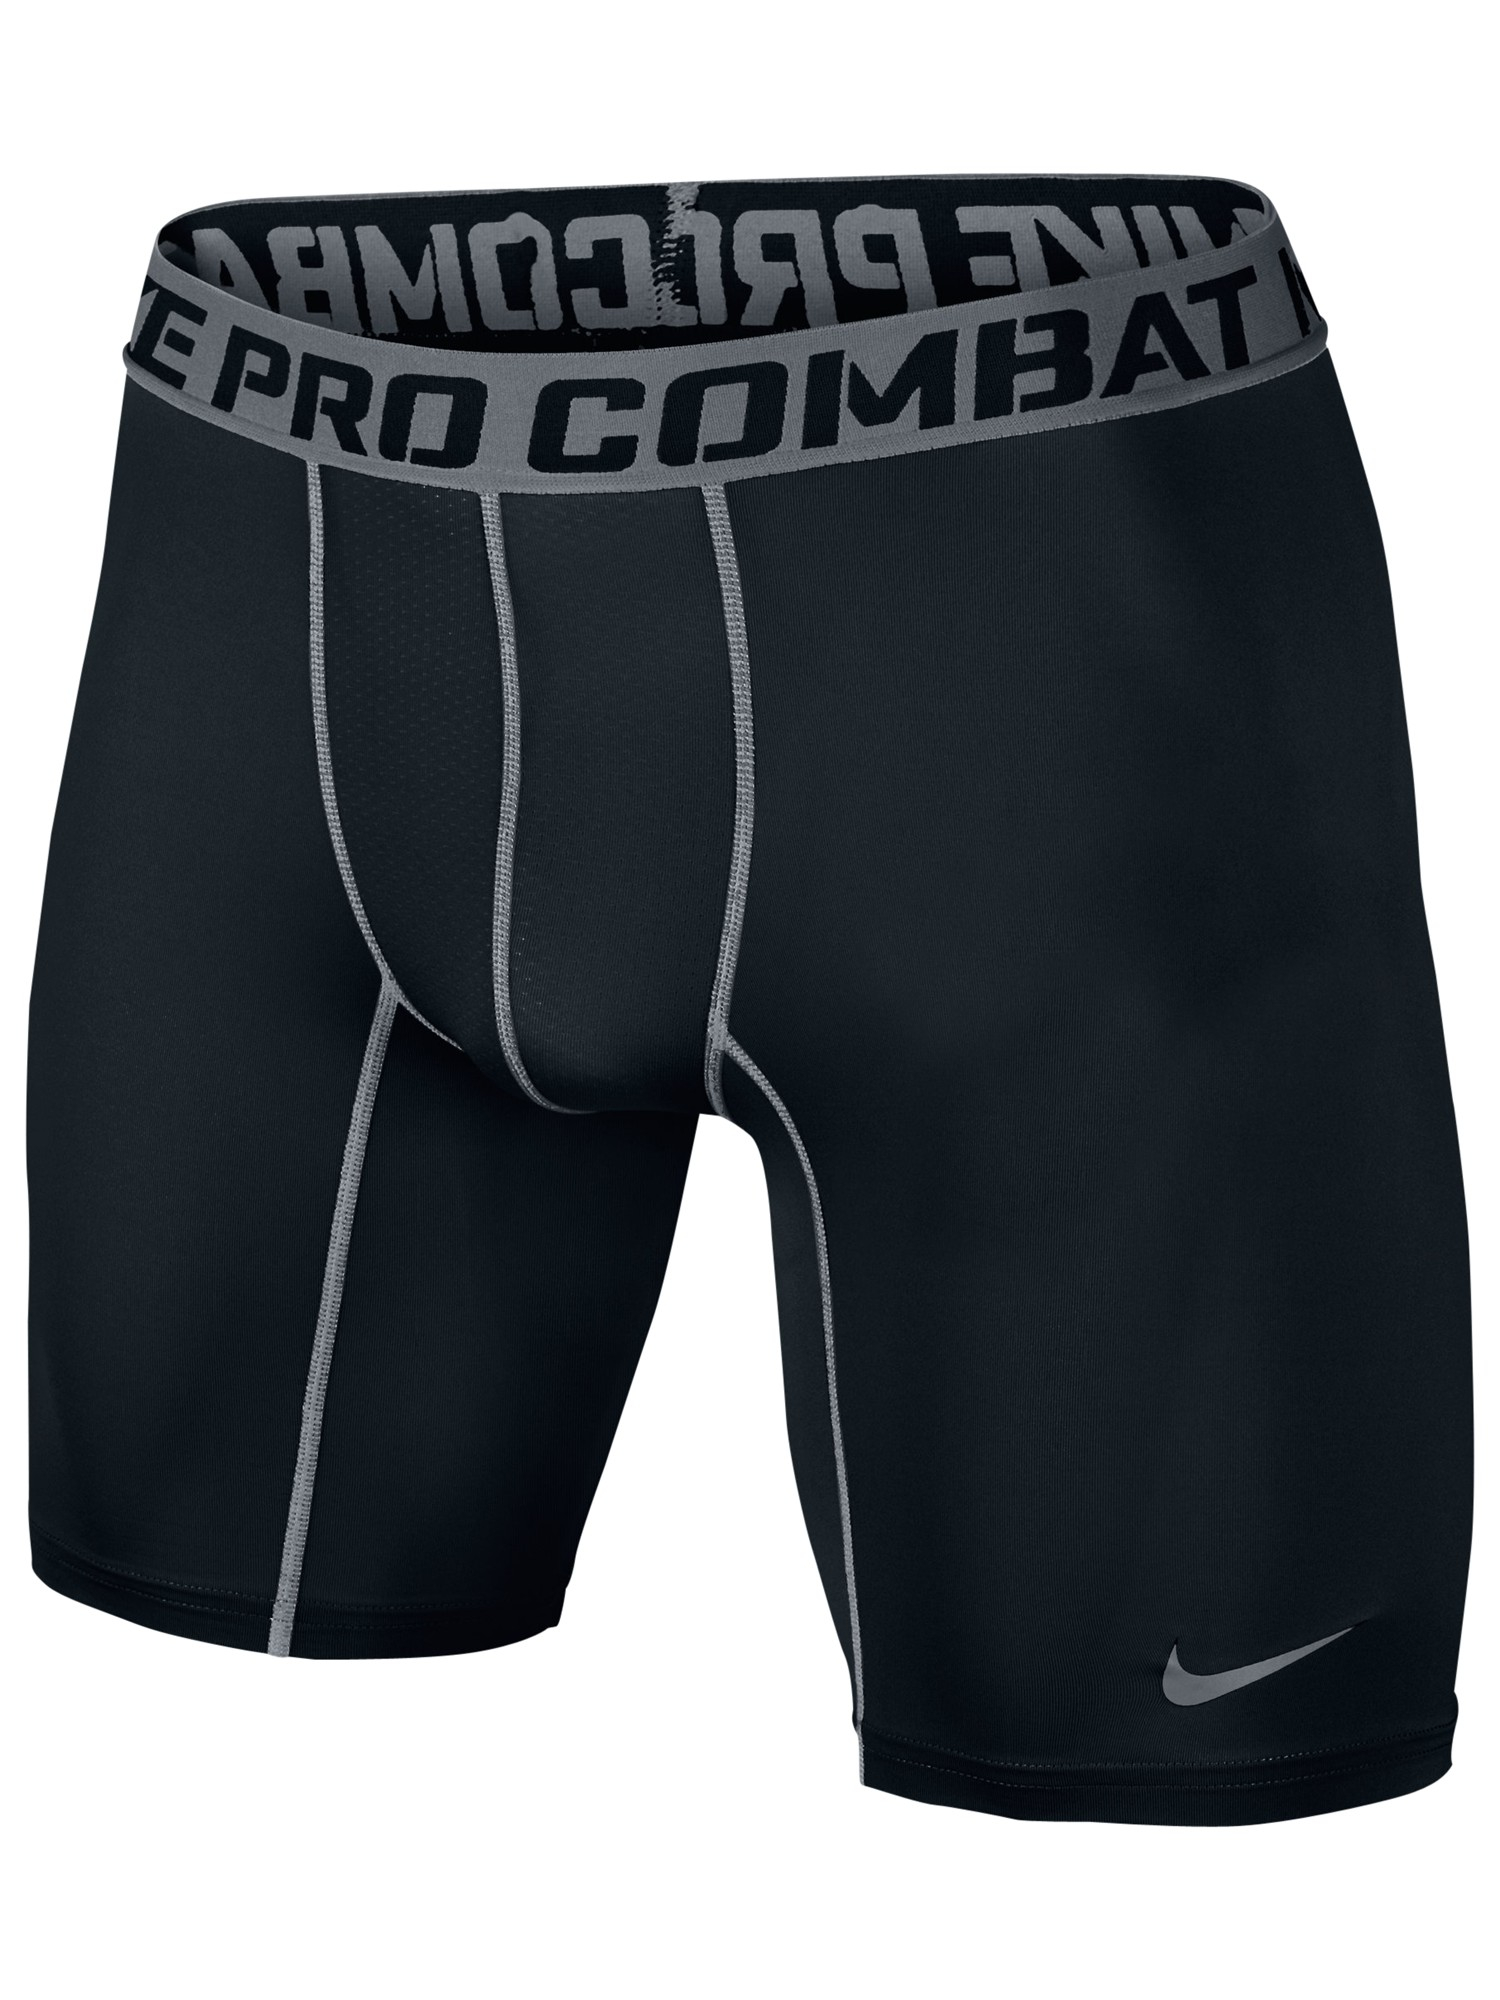 Pro Combat Compression Shorts in Black for Men | Lyst UK